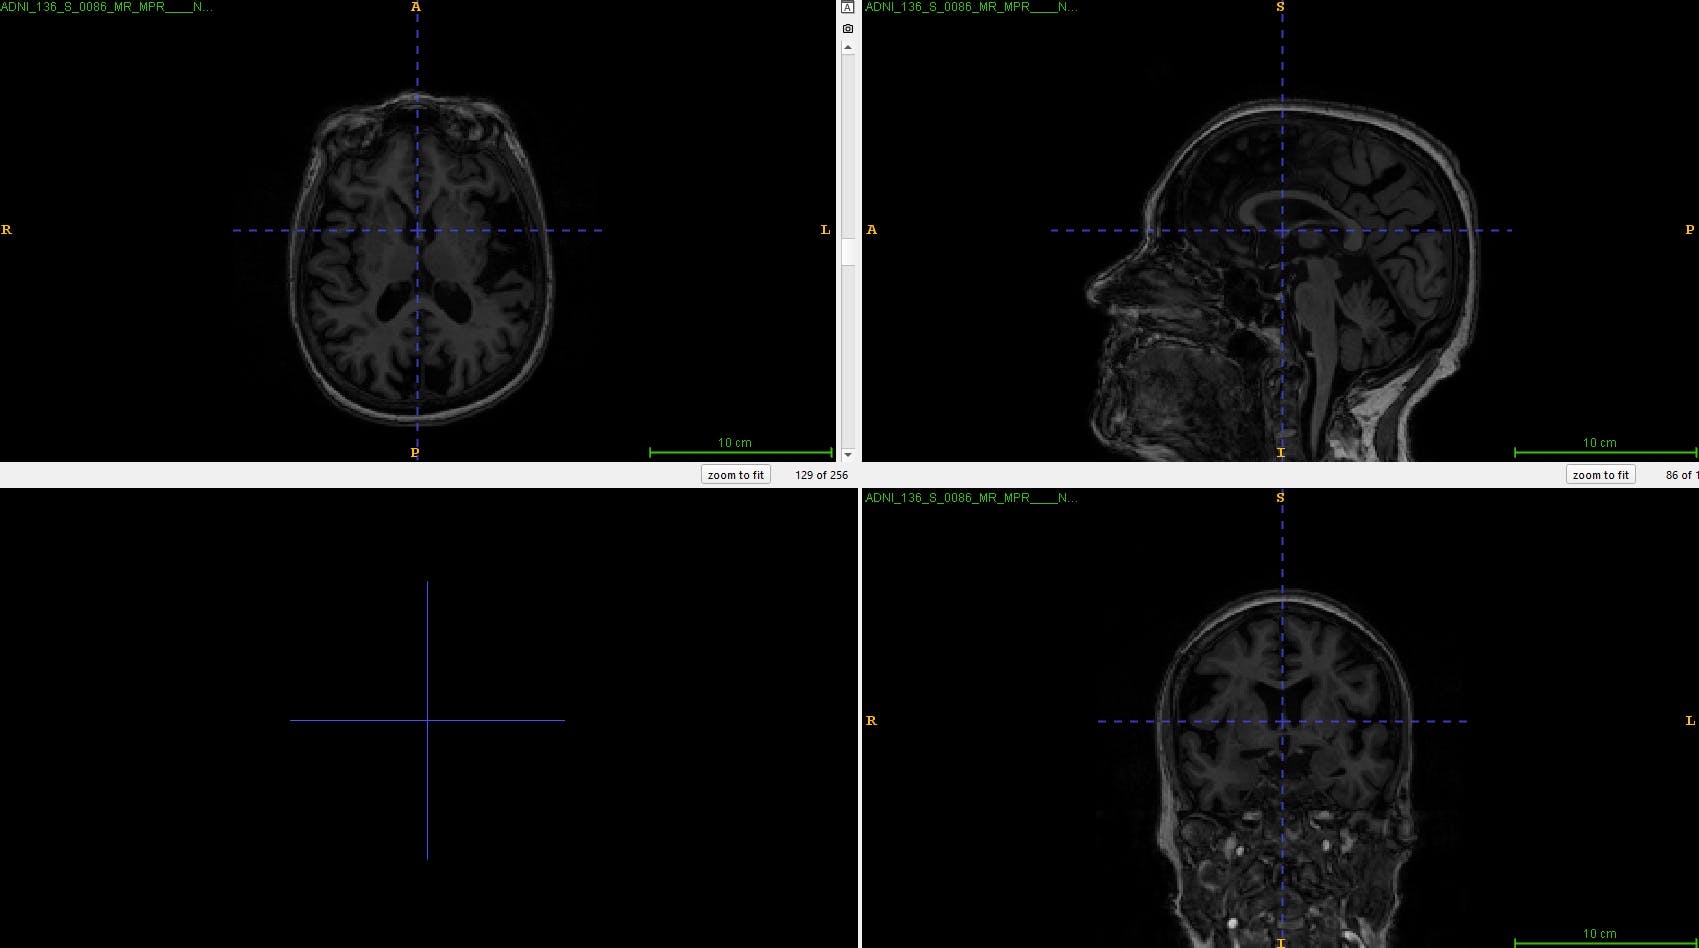 RAW Brain MRI Image in 3D from ADNI